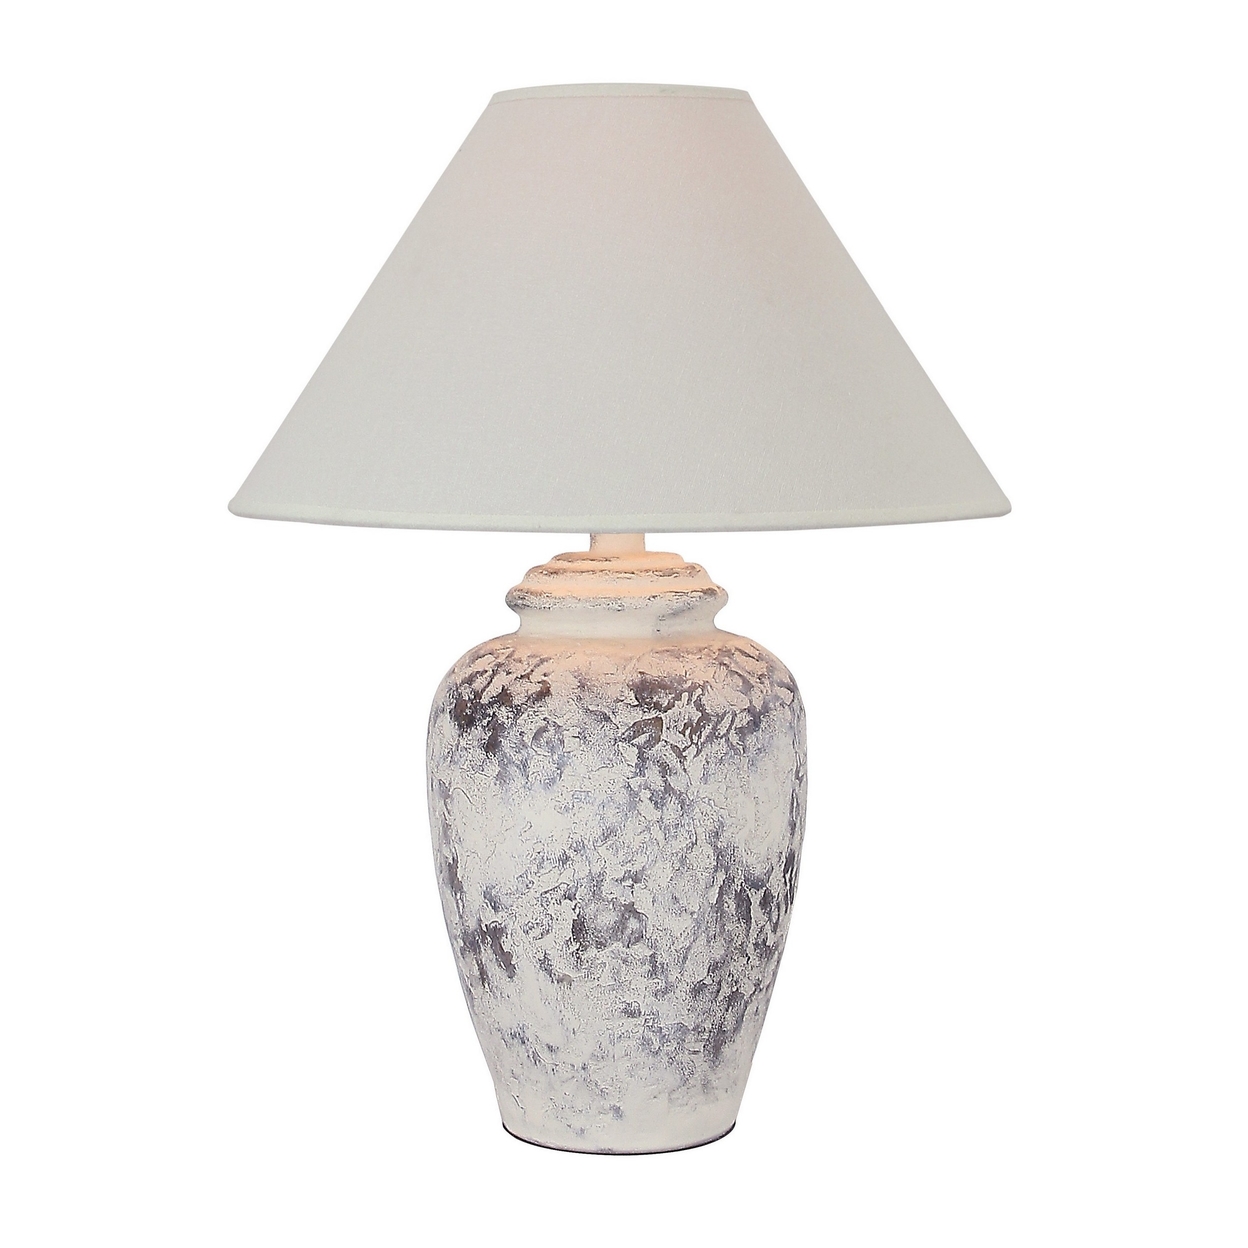 Ann 27 Inch Table Lamp, Urn Shaped Base, Rose Motifs, Crisp White Finish - Saltoro Sherpi